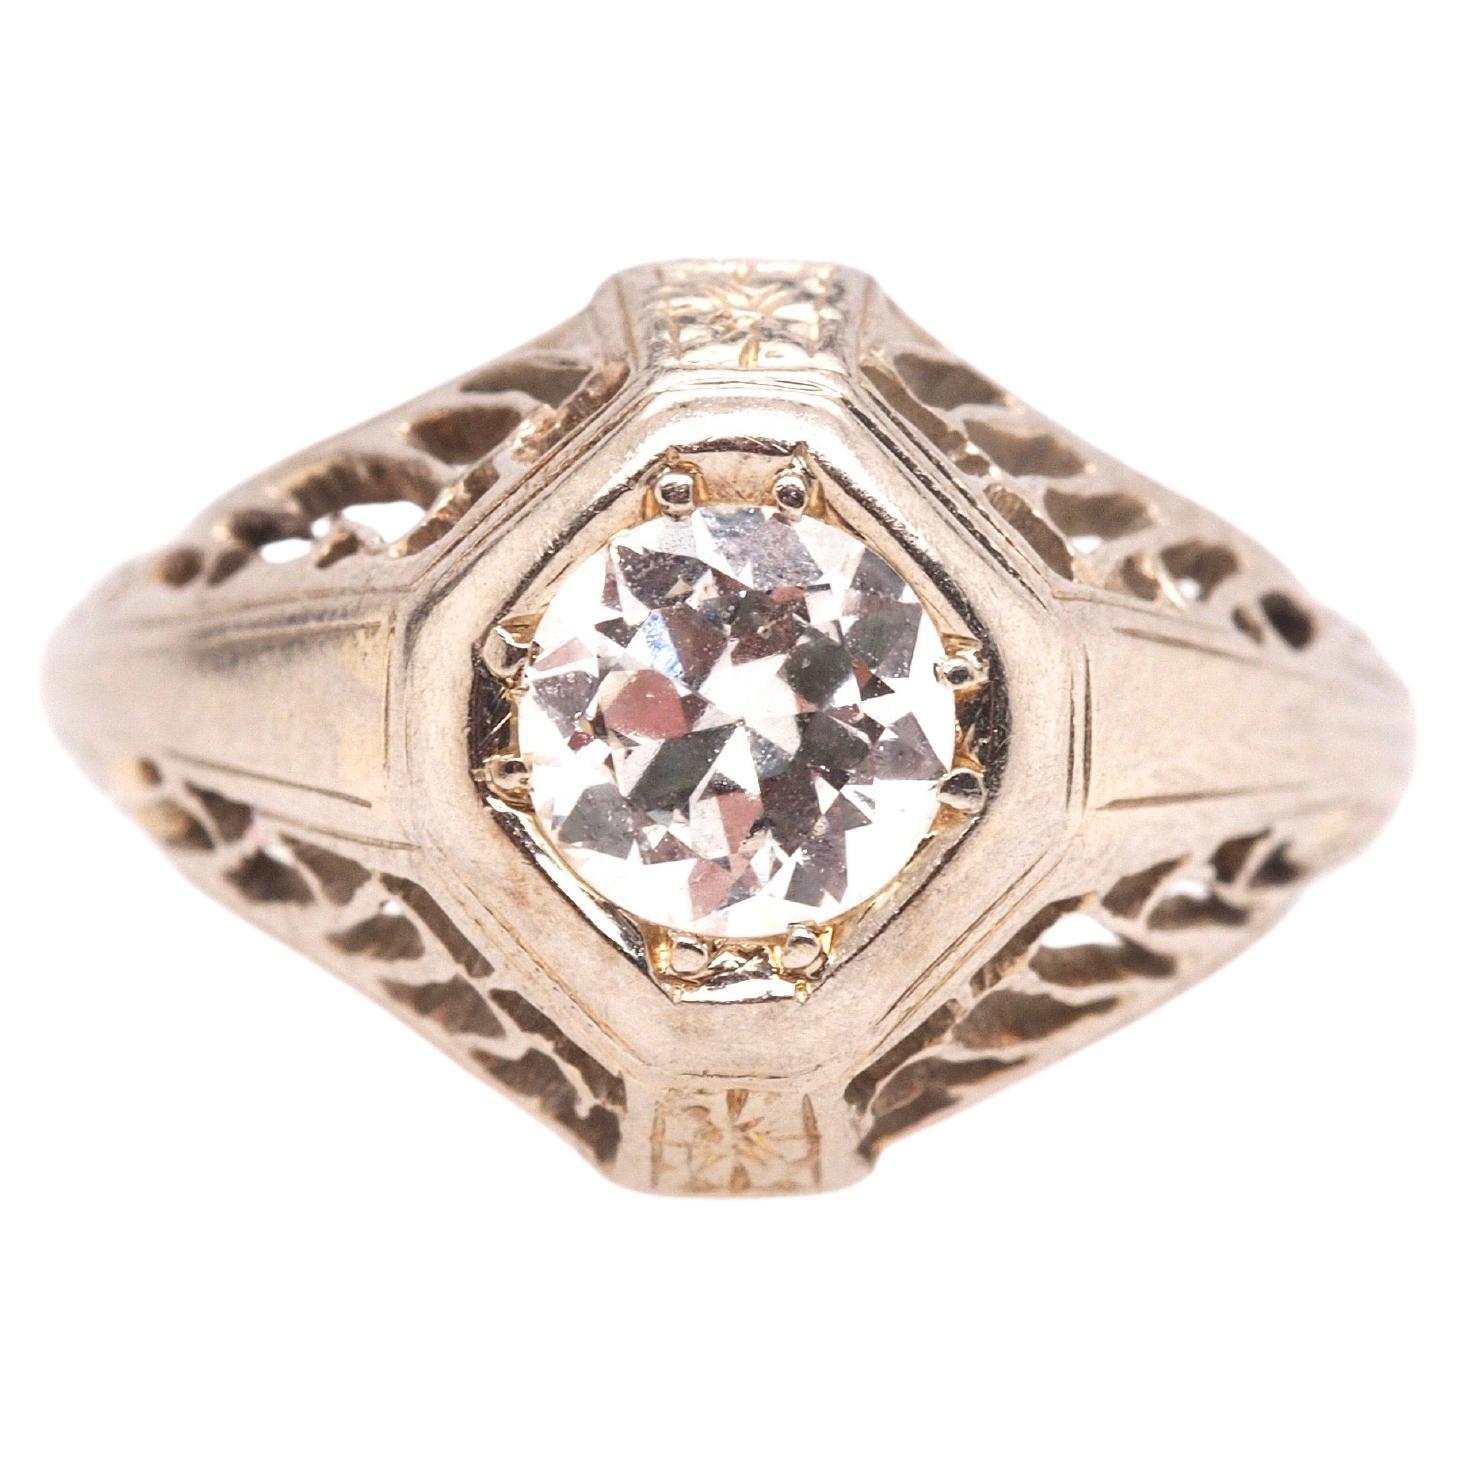 Circa 1930s 18K White Gold .35ct Old European Brilliant Diamond Engagement Ring